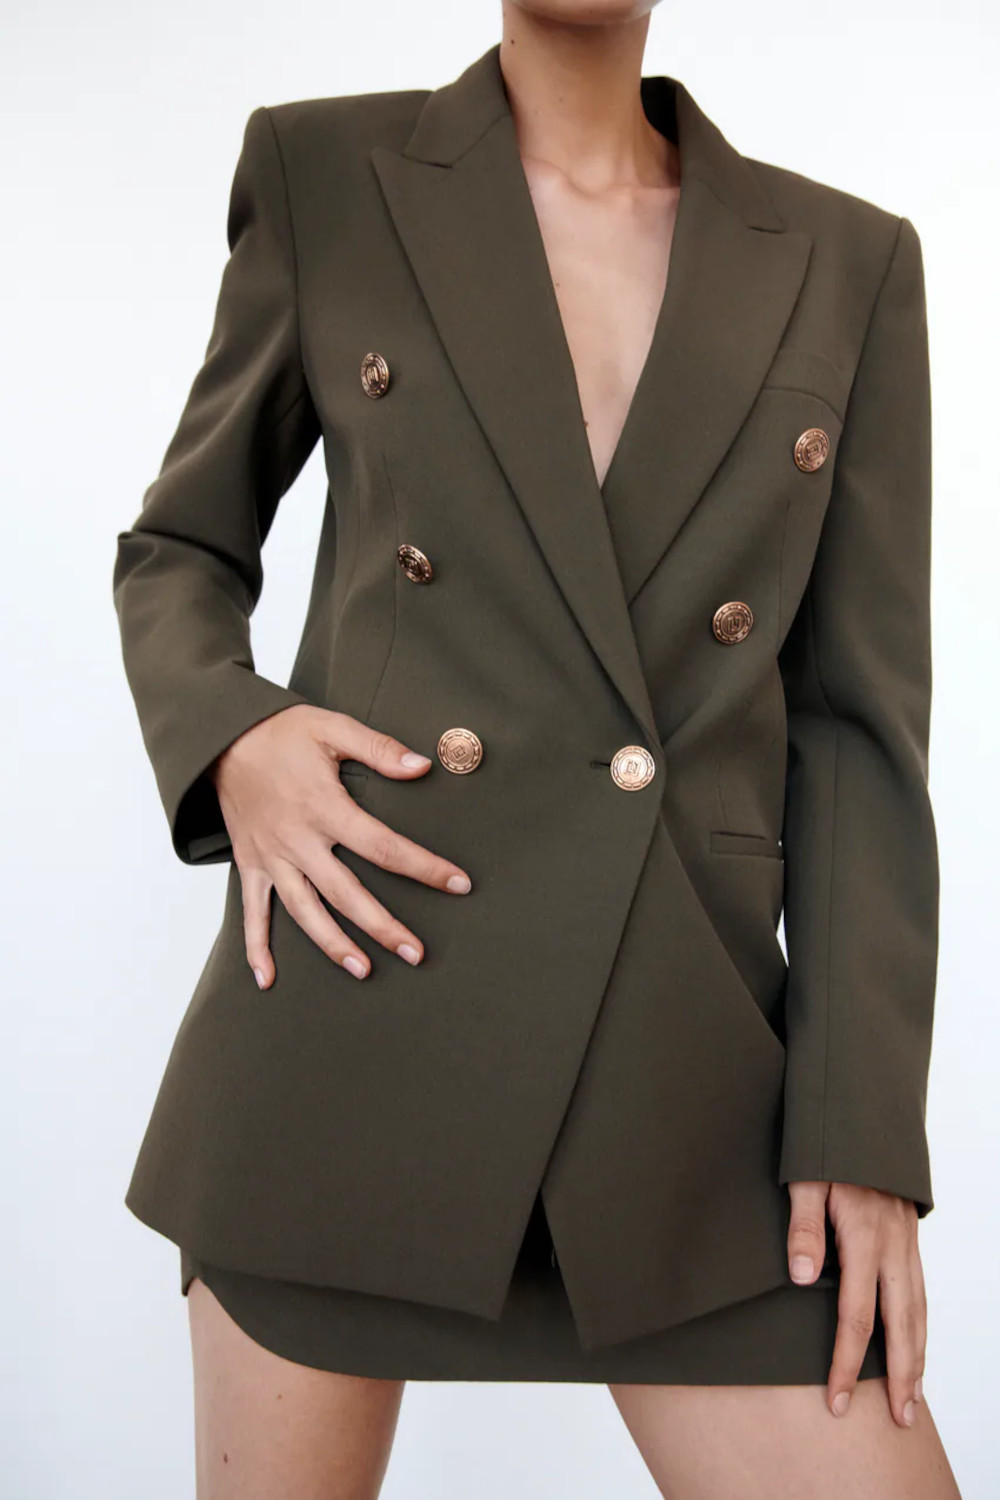 H Μαρία Μπεκατώρου με σακάκι από τα Zara, σε χακί χρώμα